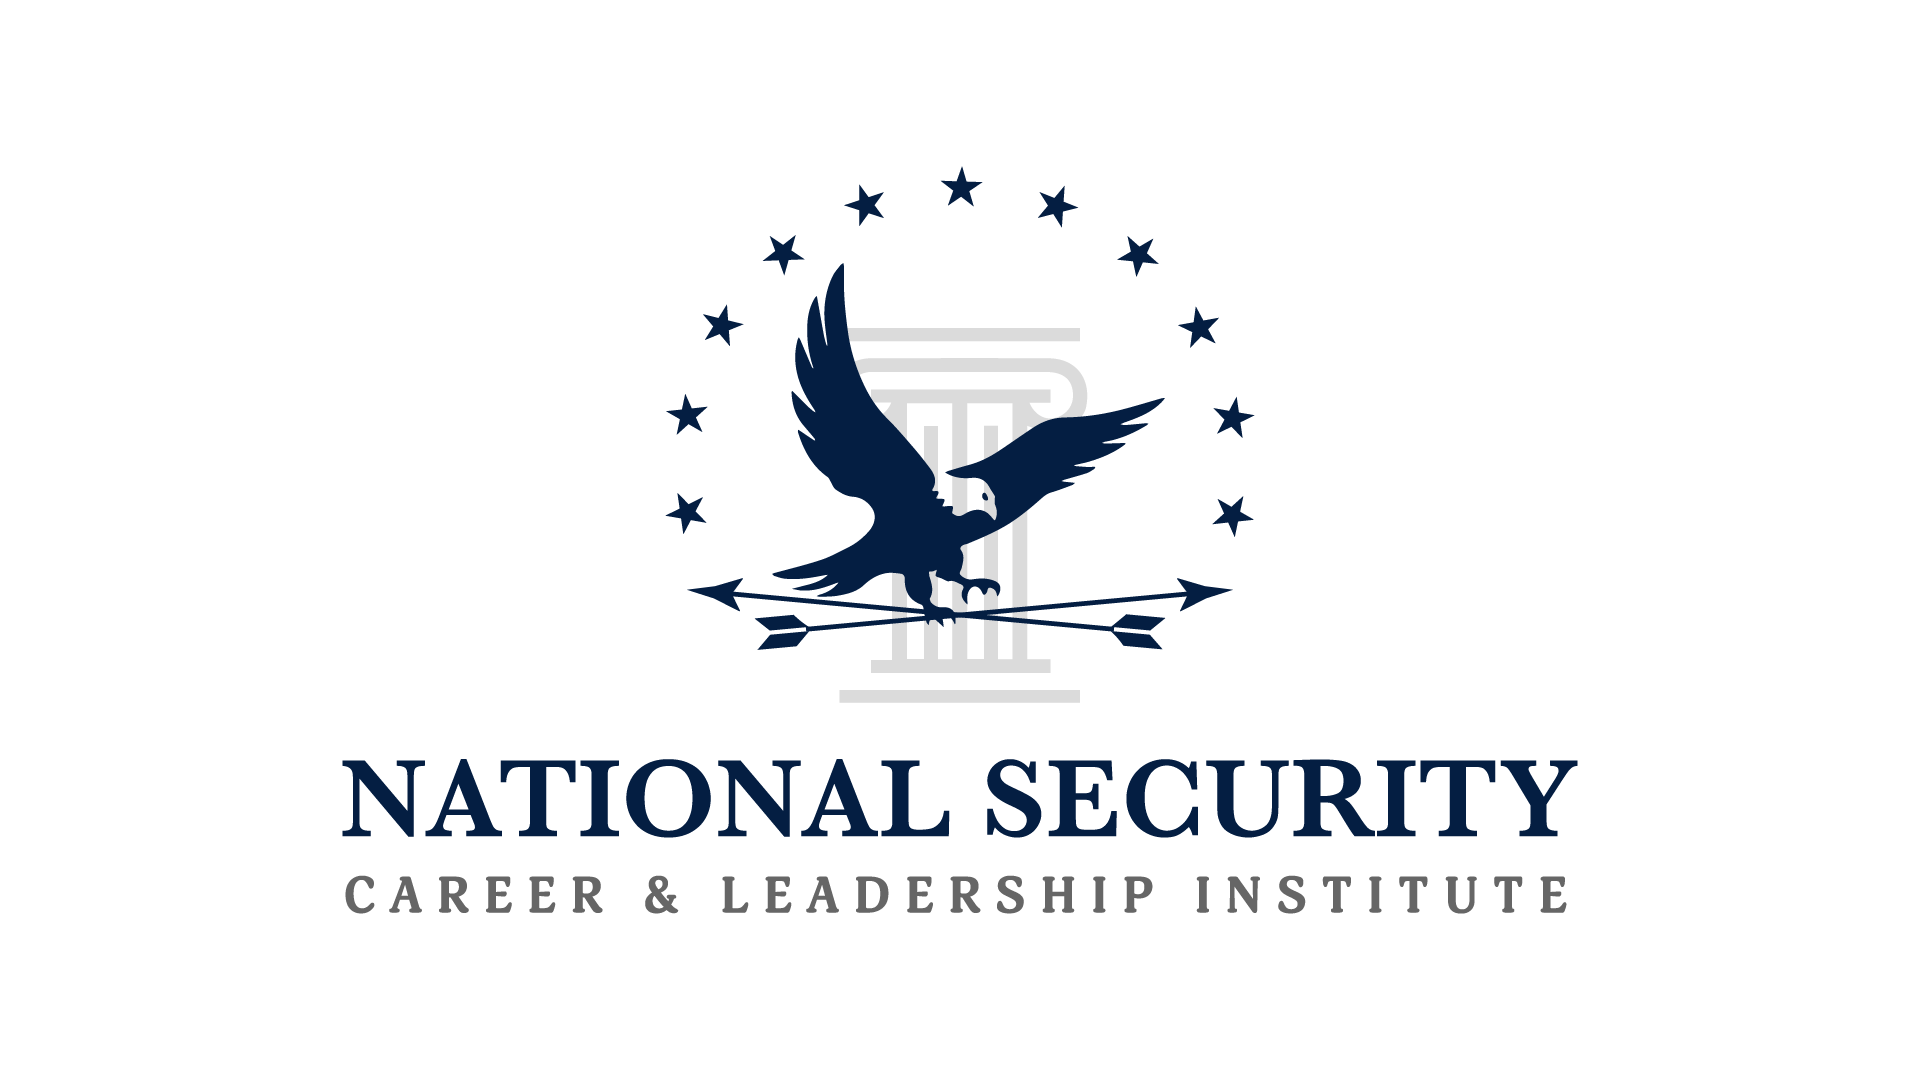 National Security Career & Leadership Institute logo